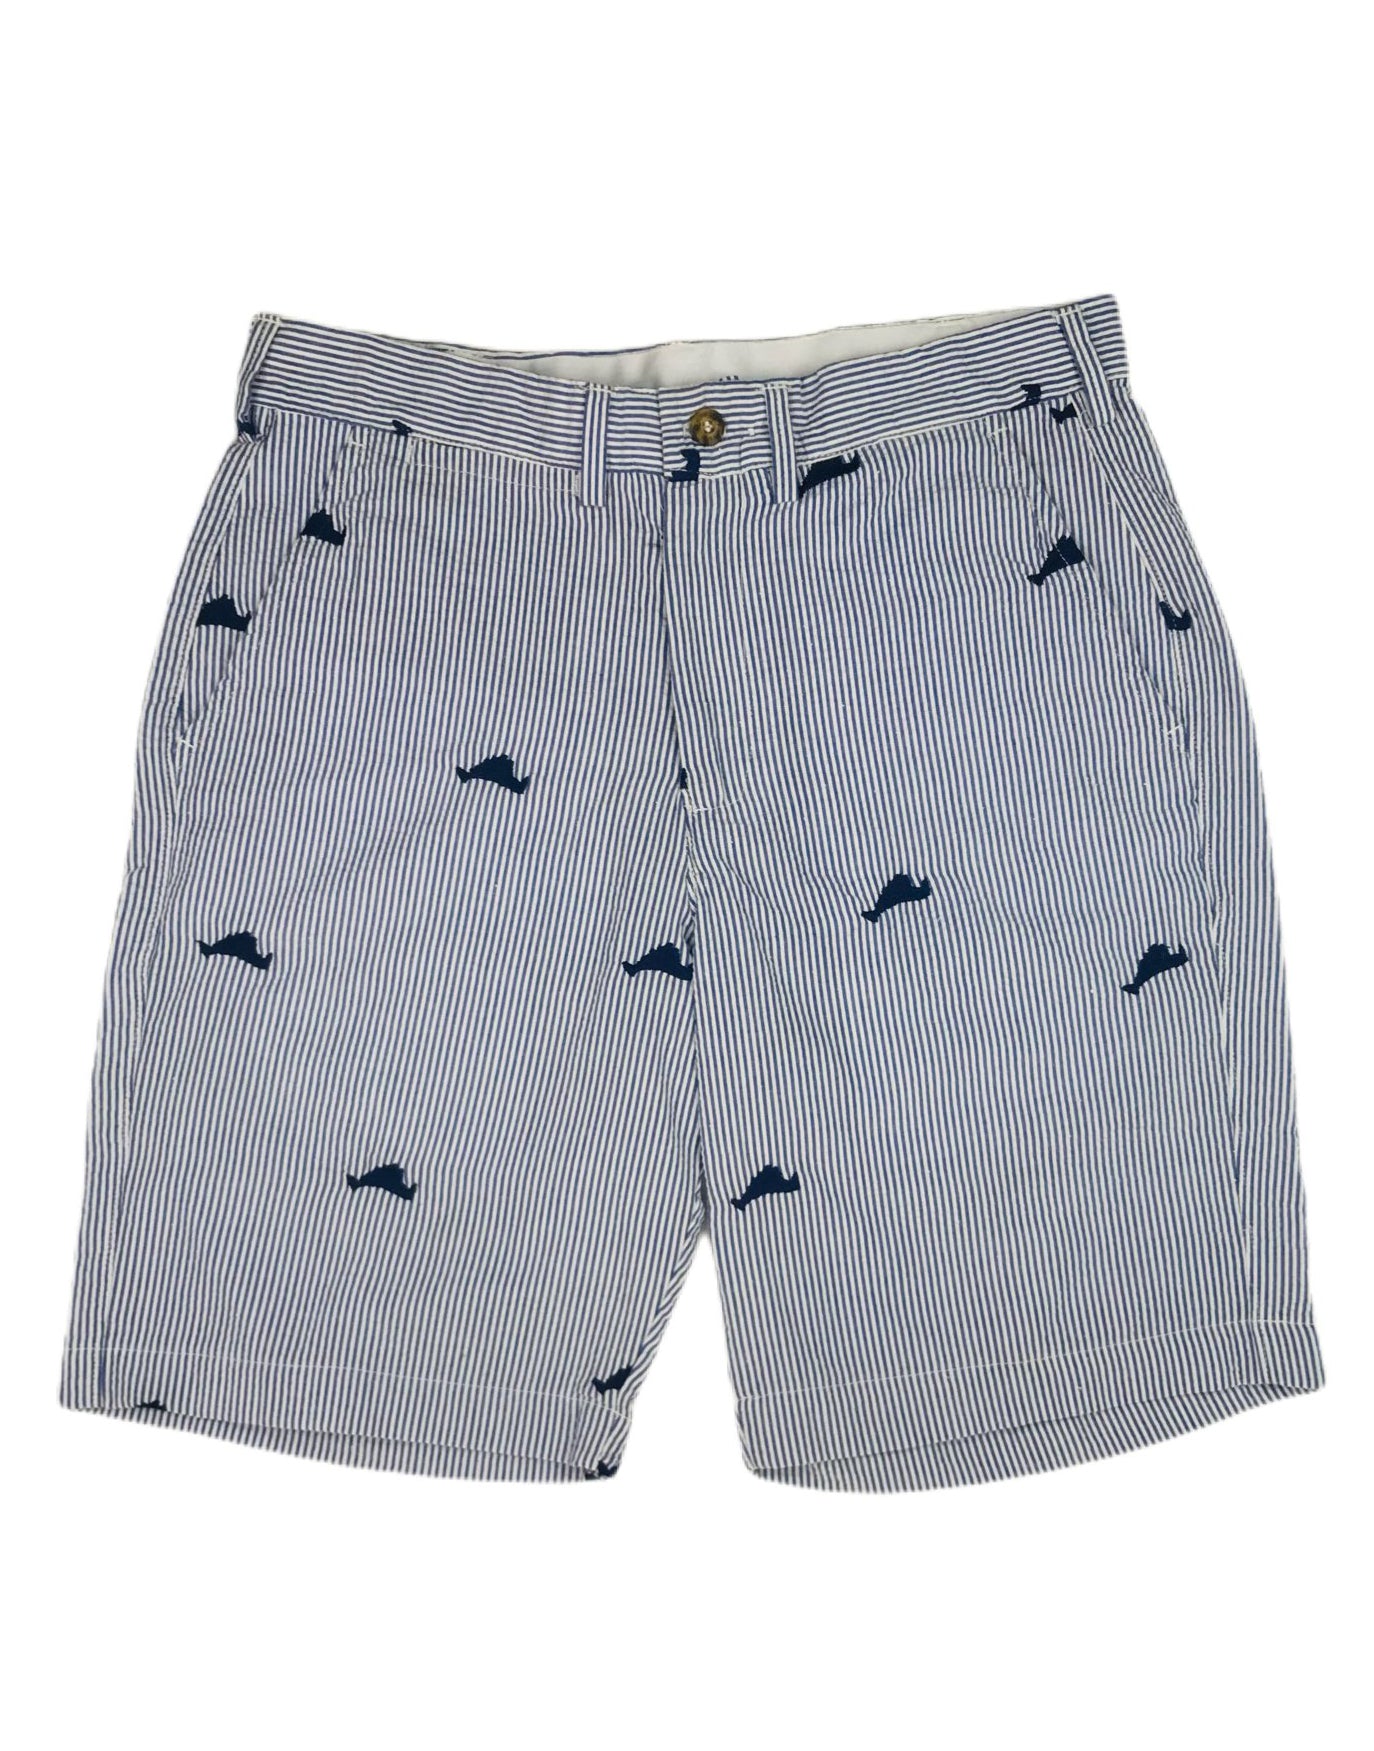 Blue Mens Seersucker Shorts with Navy Embroidered Martha's Vineyards